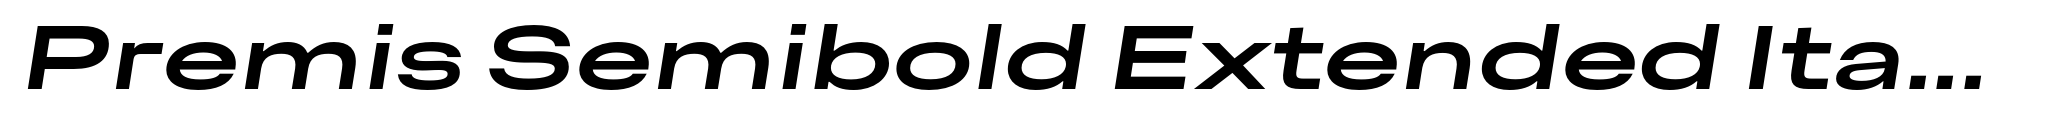 Premis Semibold Extended Italic image